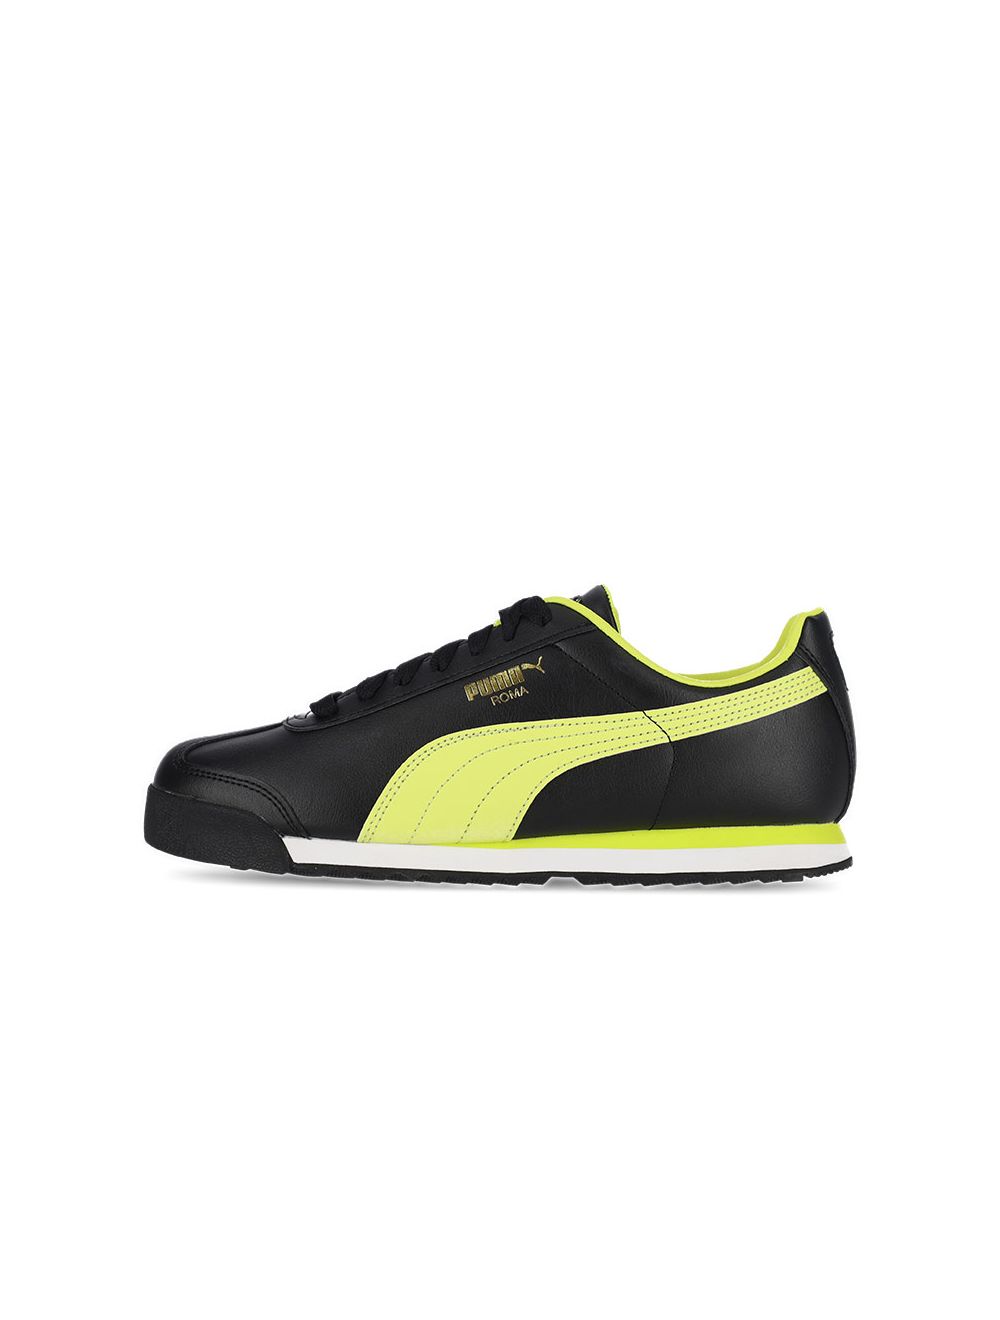 Shop Puma Roma Basic+ Mens Shoes Black/Lime | Studio 88